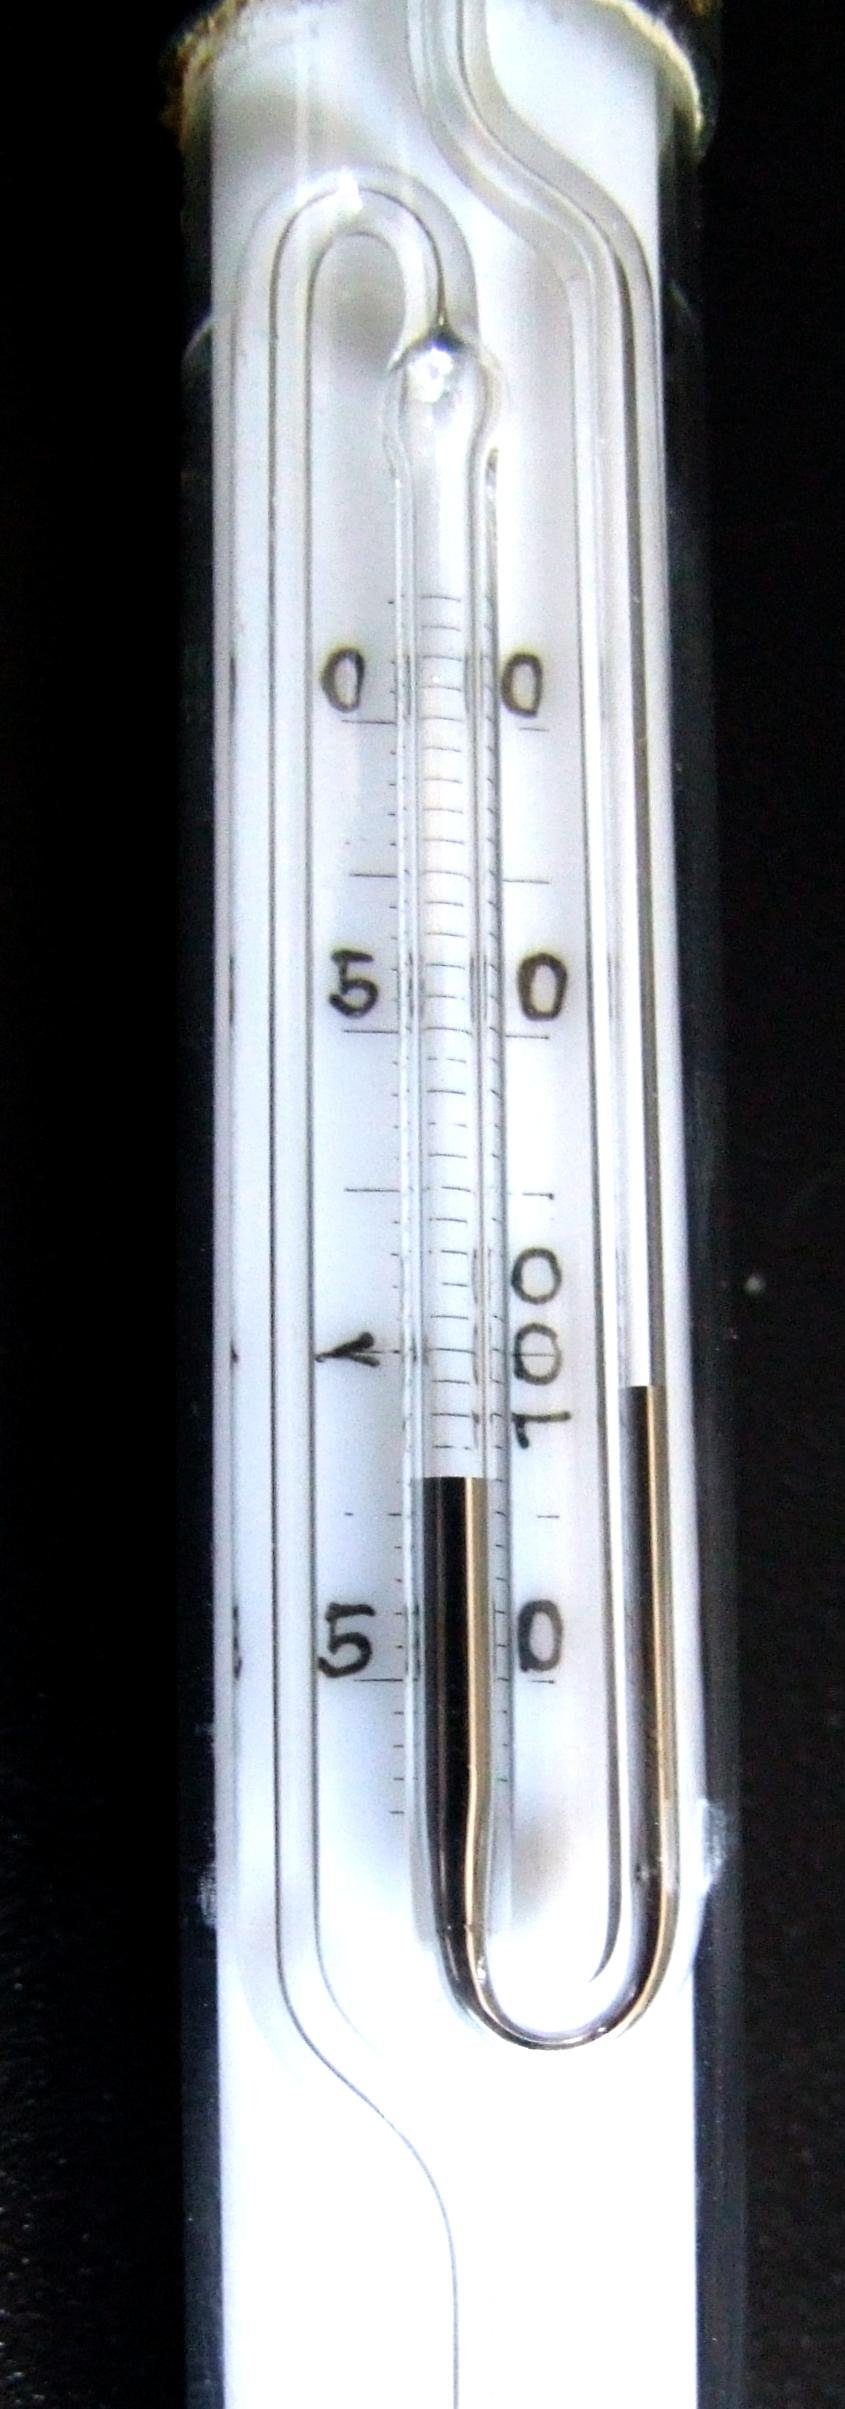 ميزان حرارة بيكمان Beckmann thermometer